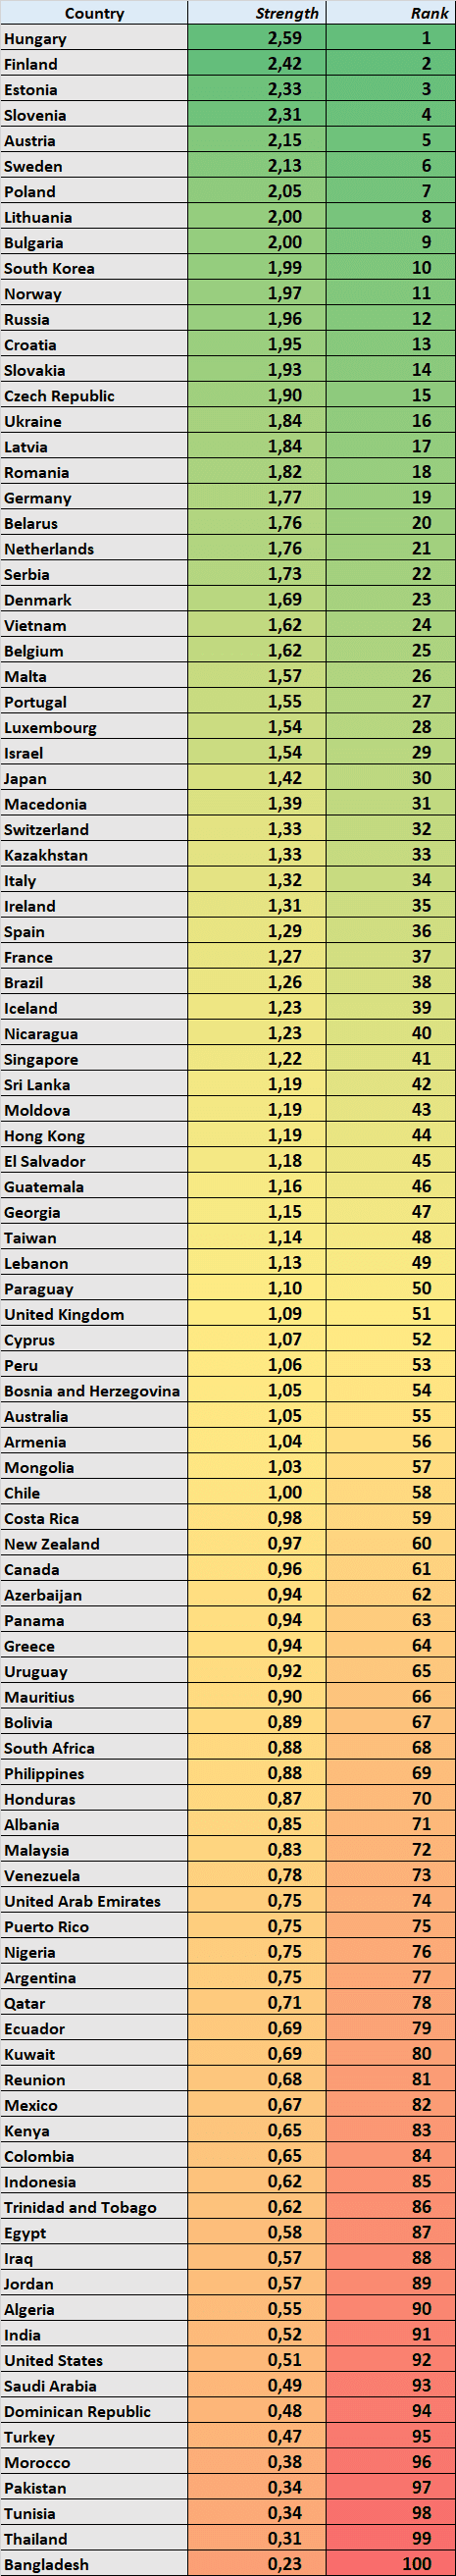 ABBA global heatmap list of countries